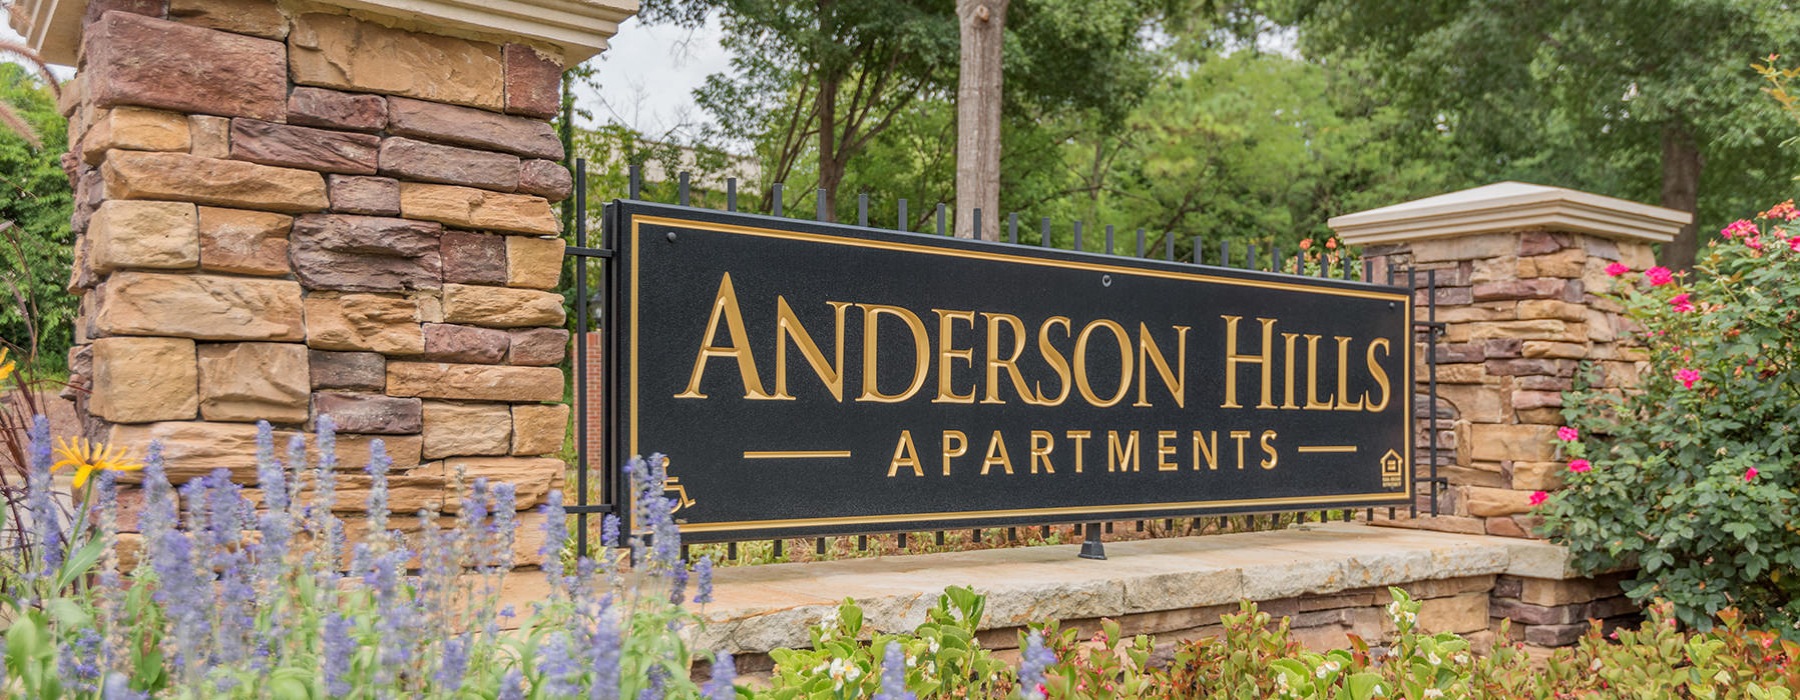 Anderson Hills